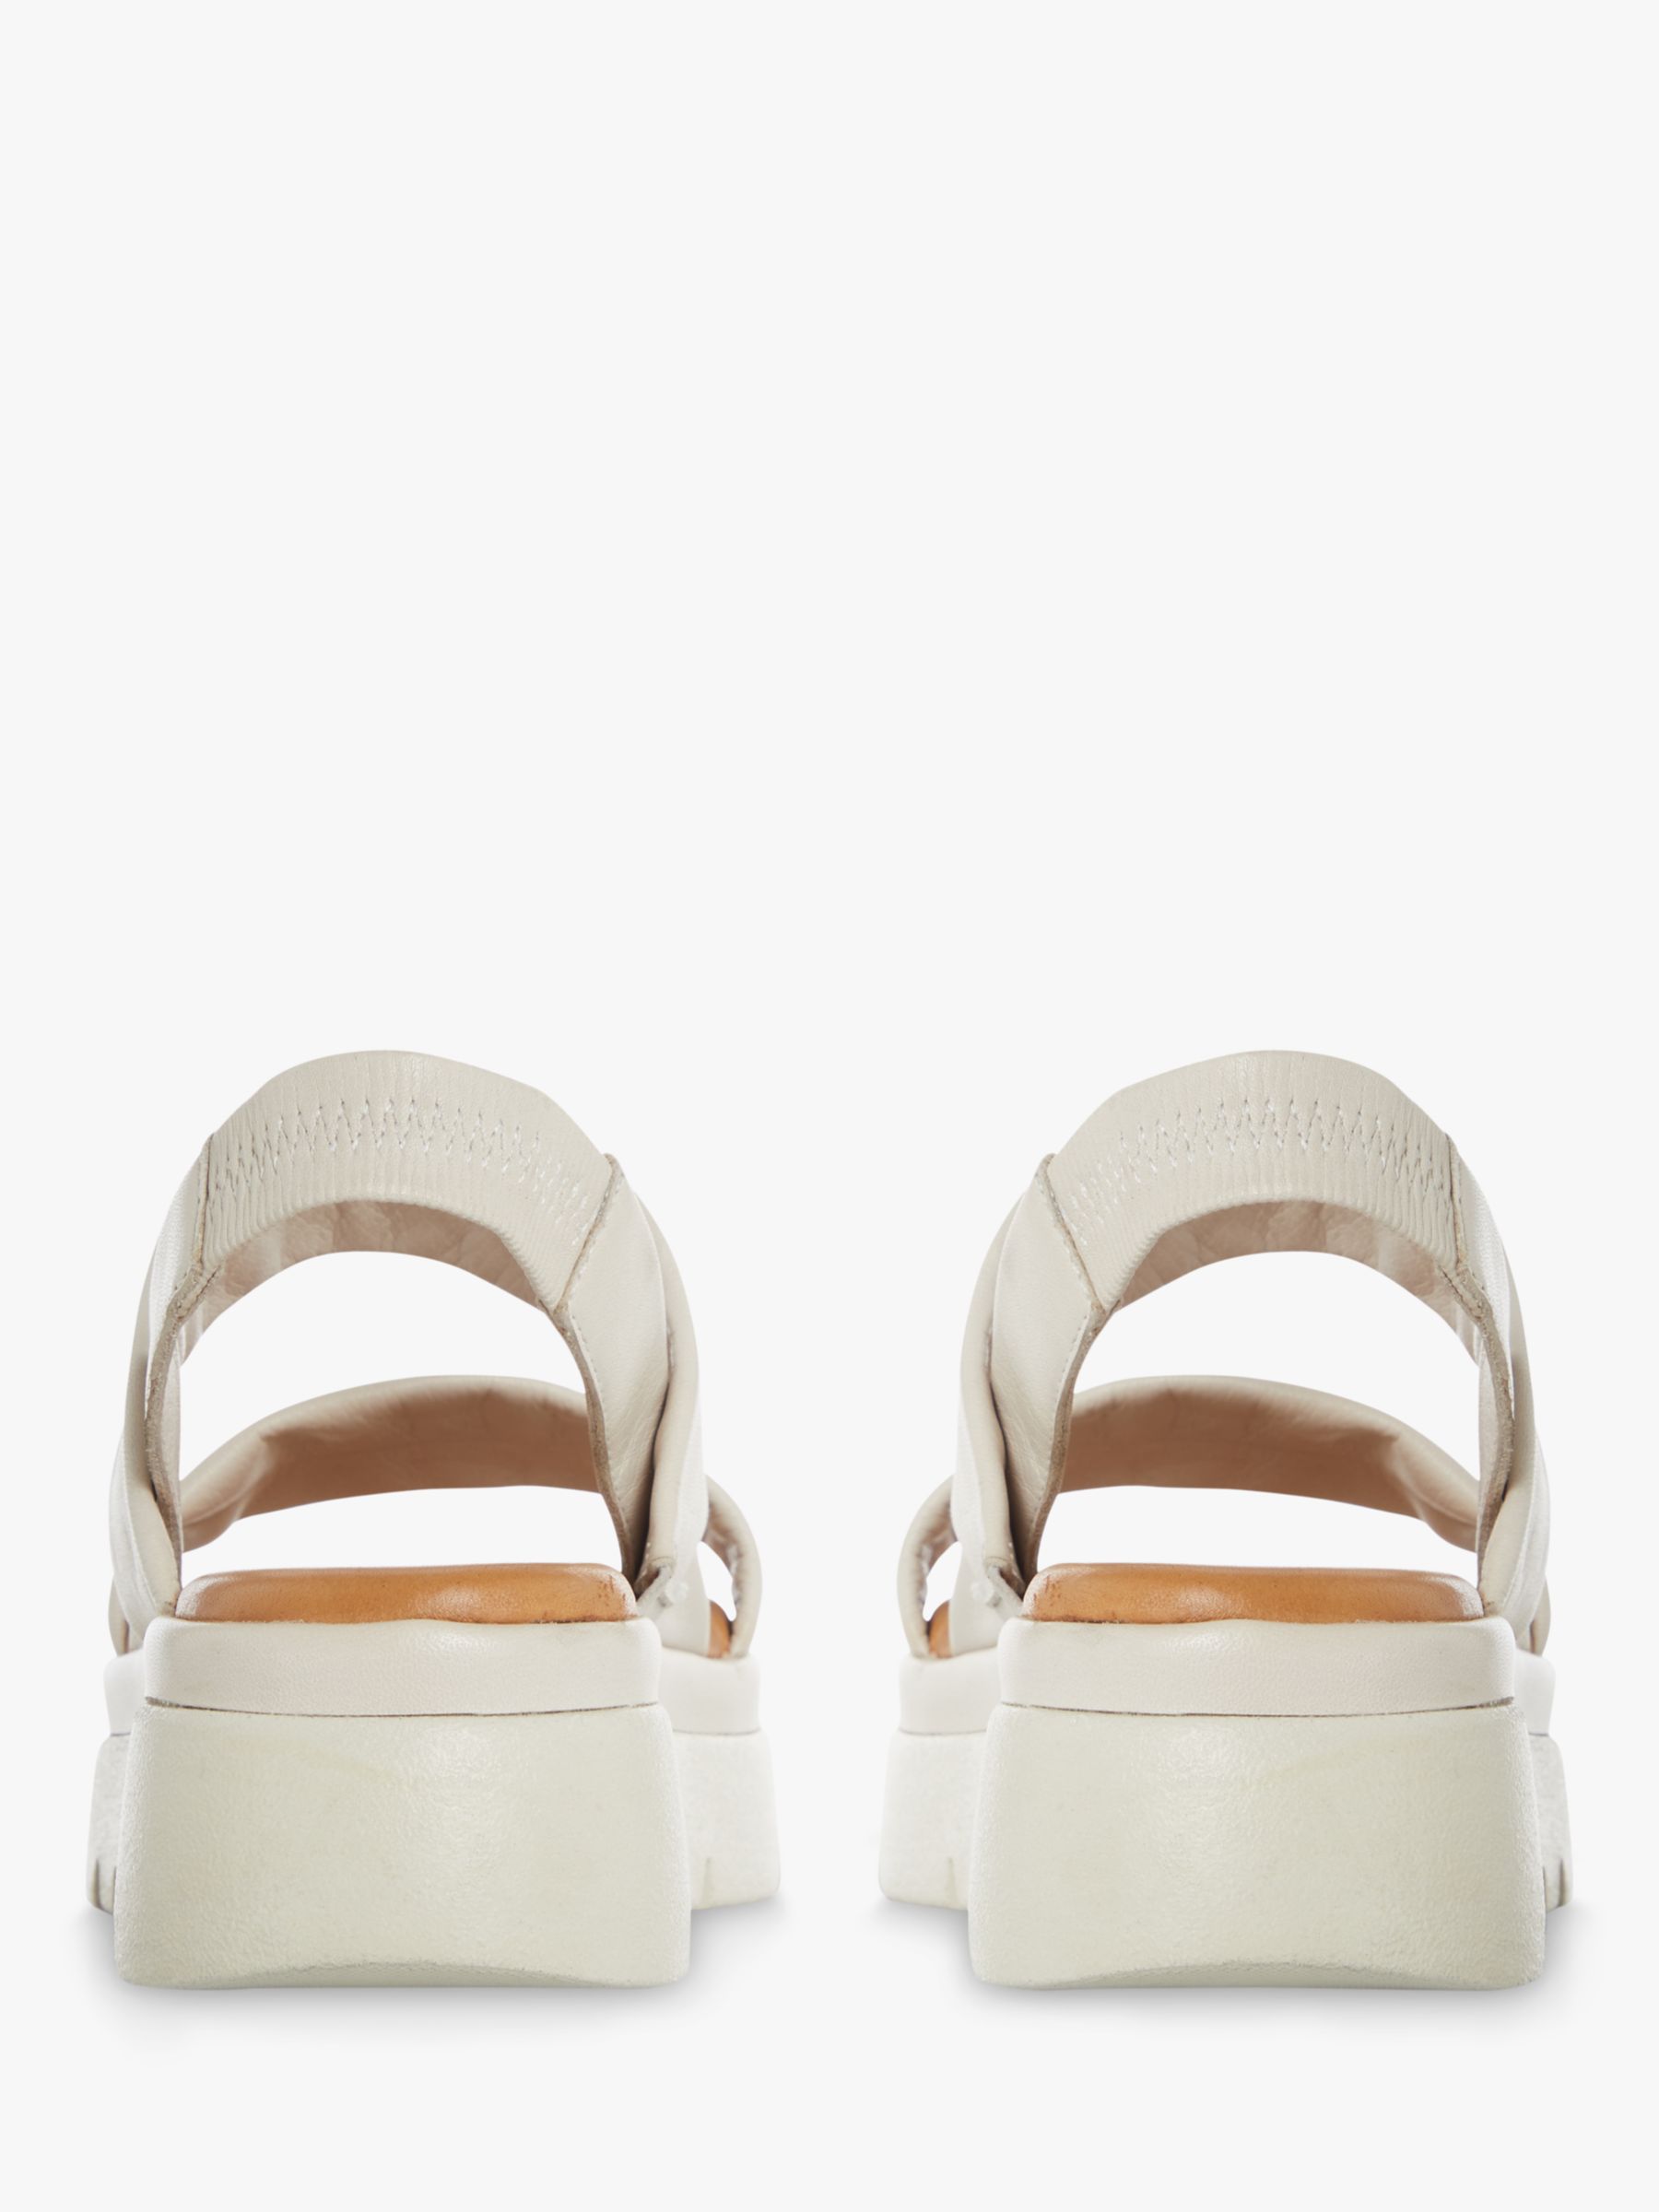 Dune Location Leather Padded Flatform Sandals, White at John Lewis Partners